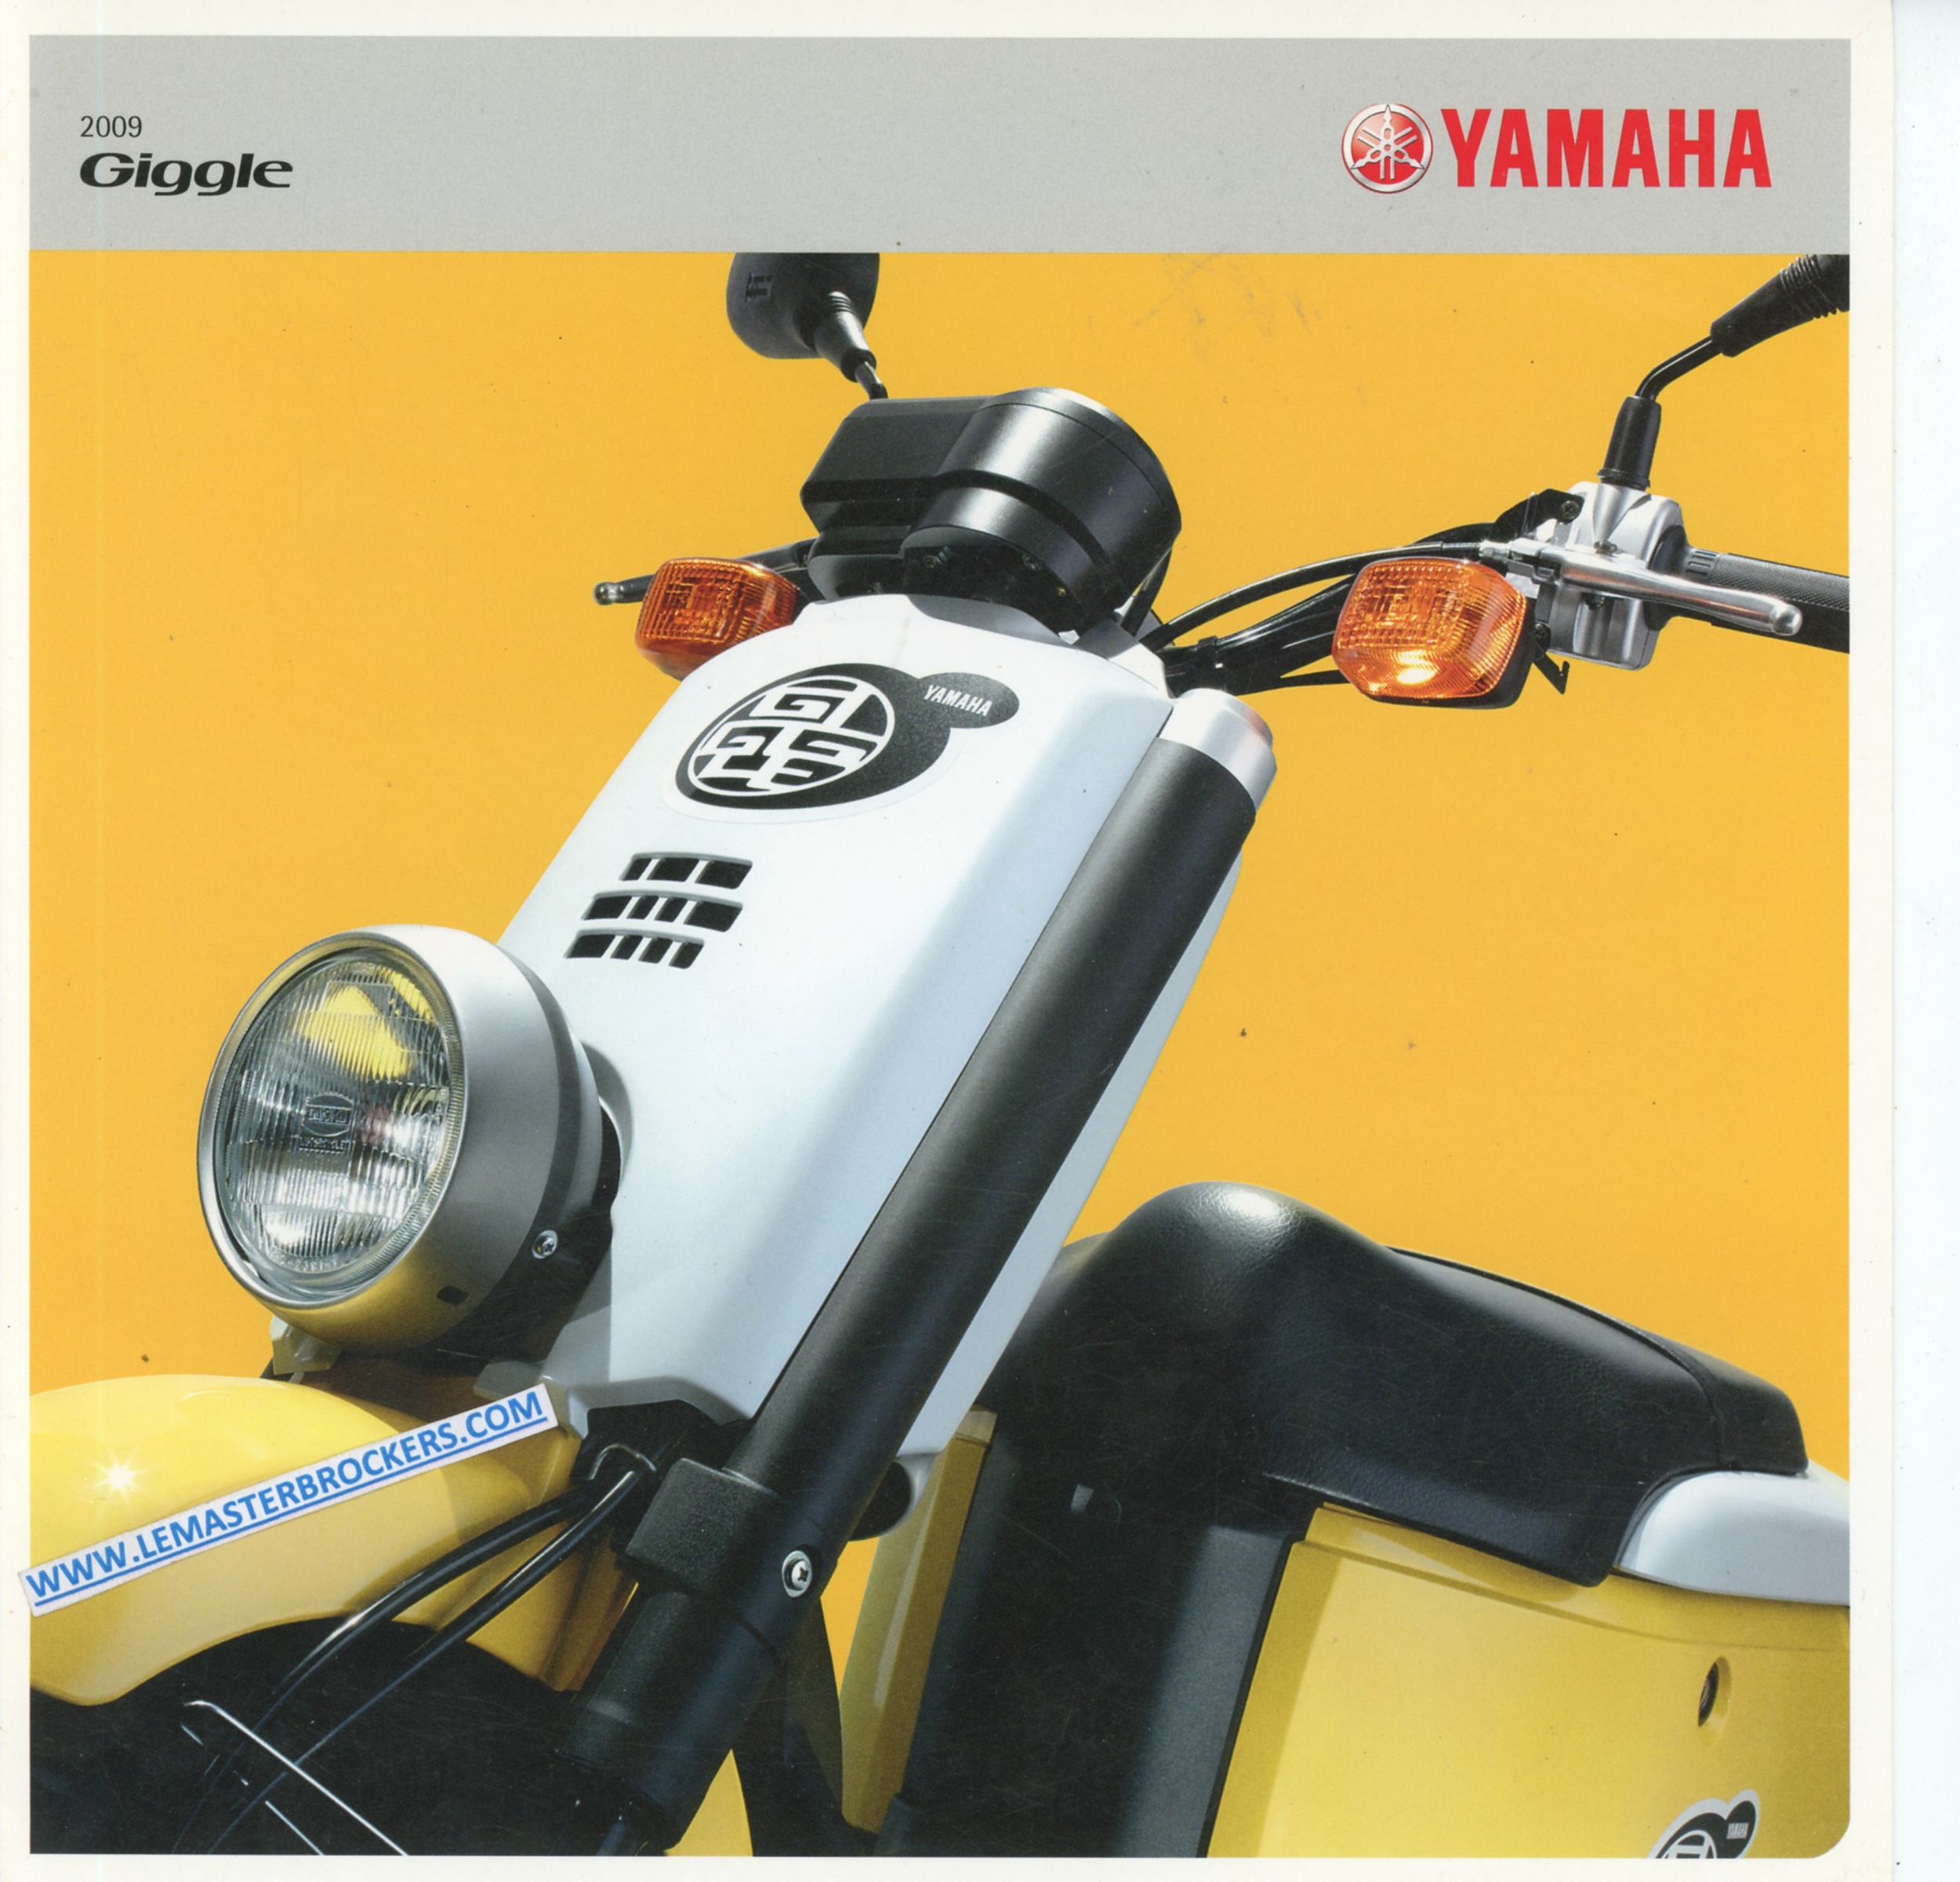 BROCHURE-SCOOTER-YAMAHA-GIGGLE-BXF50-LEMASTERBROCKERS-CATALOGUE-PROSPECTUS-MOTO